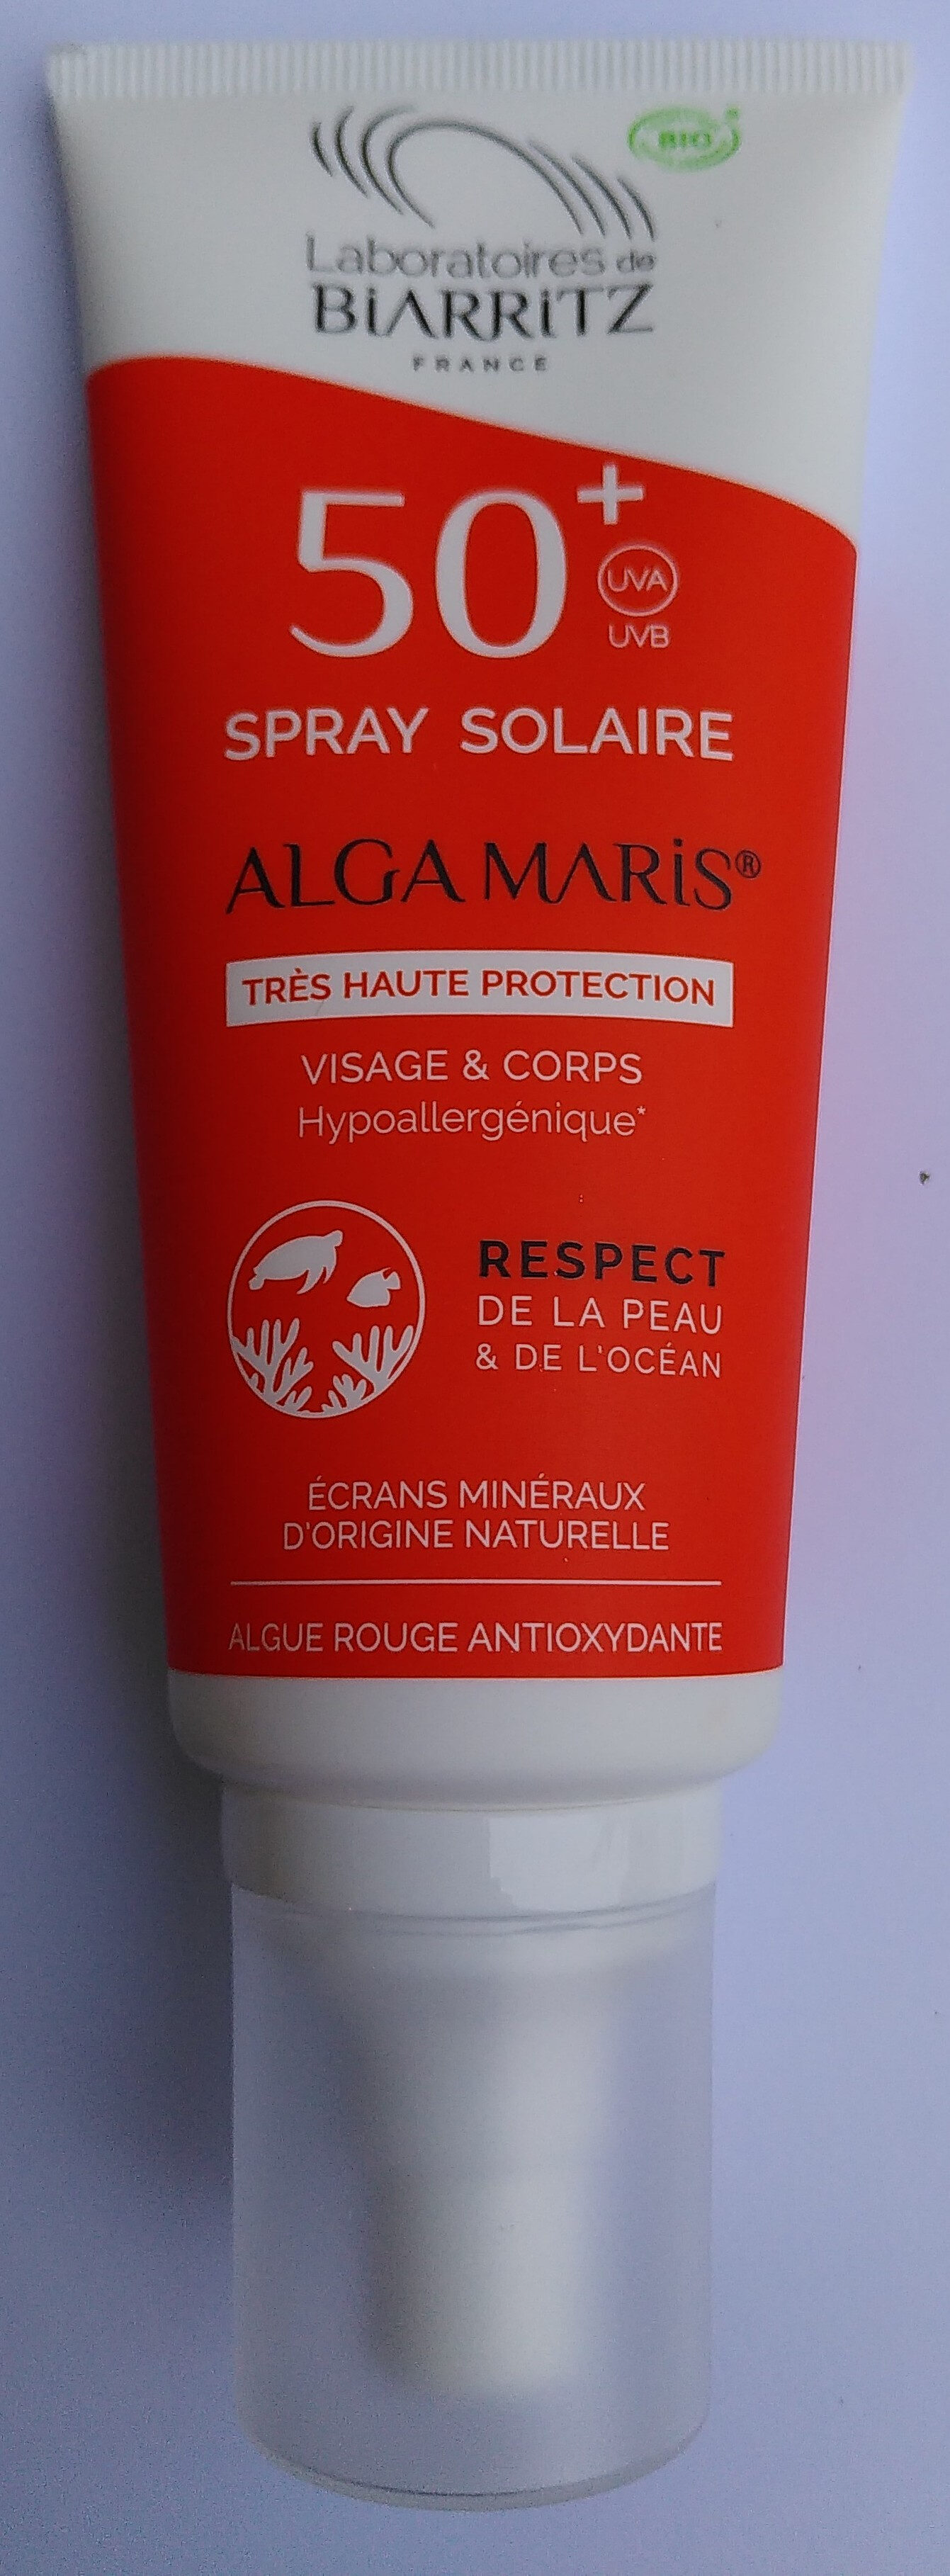 Spray solaire Alga maris - Product - fr